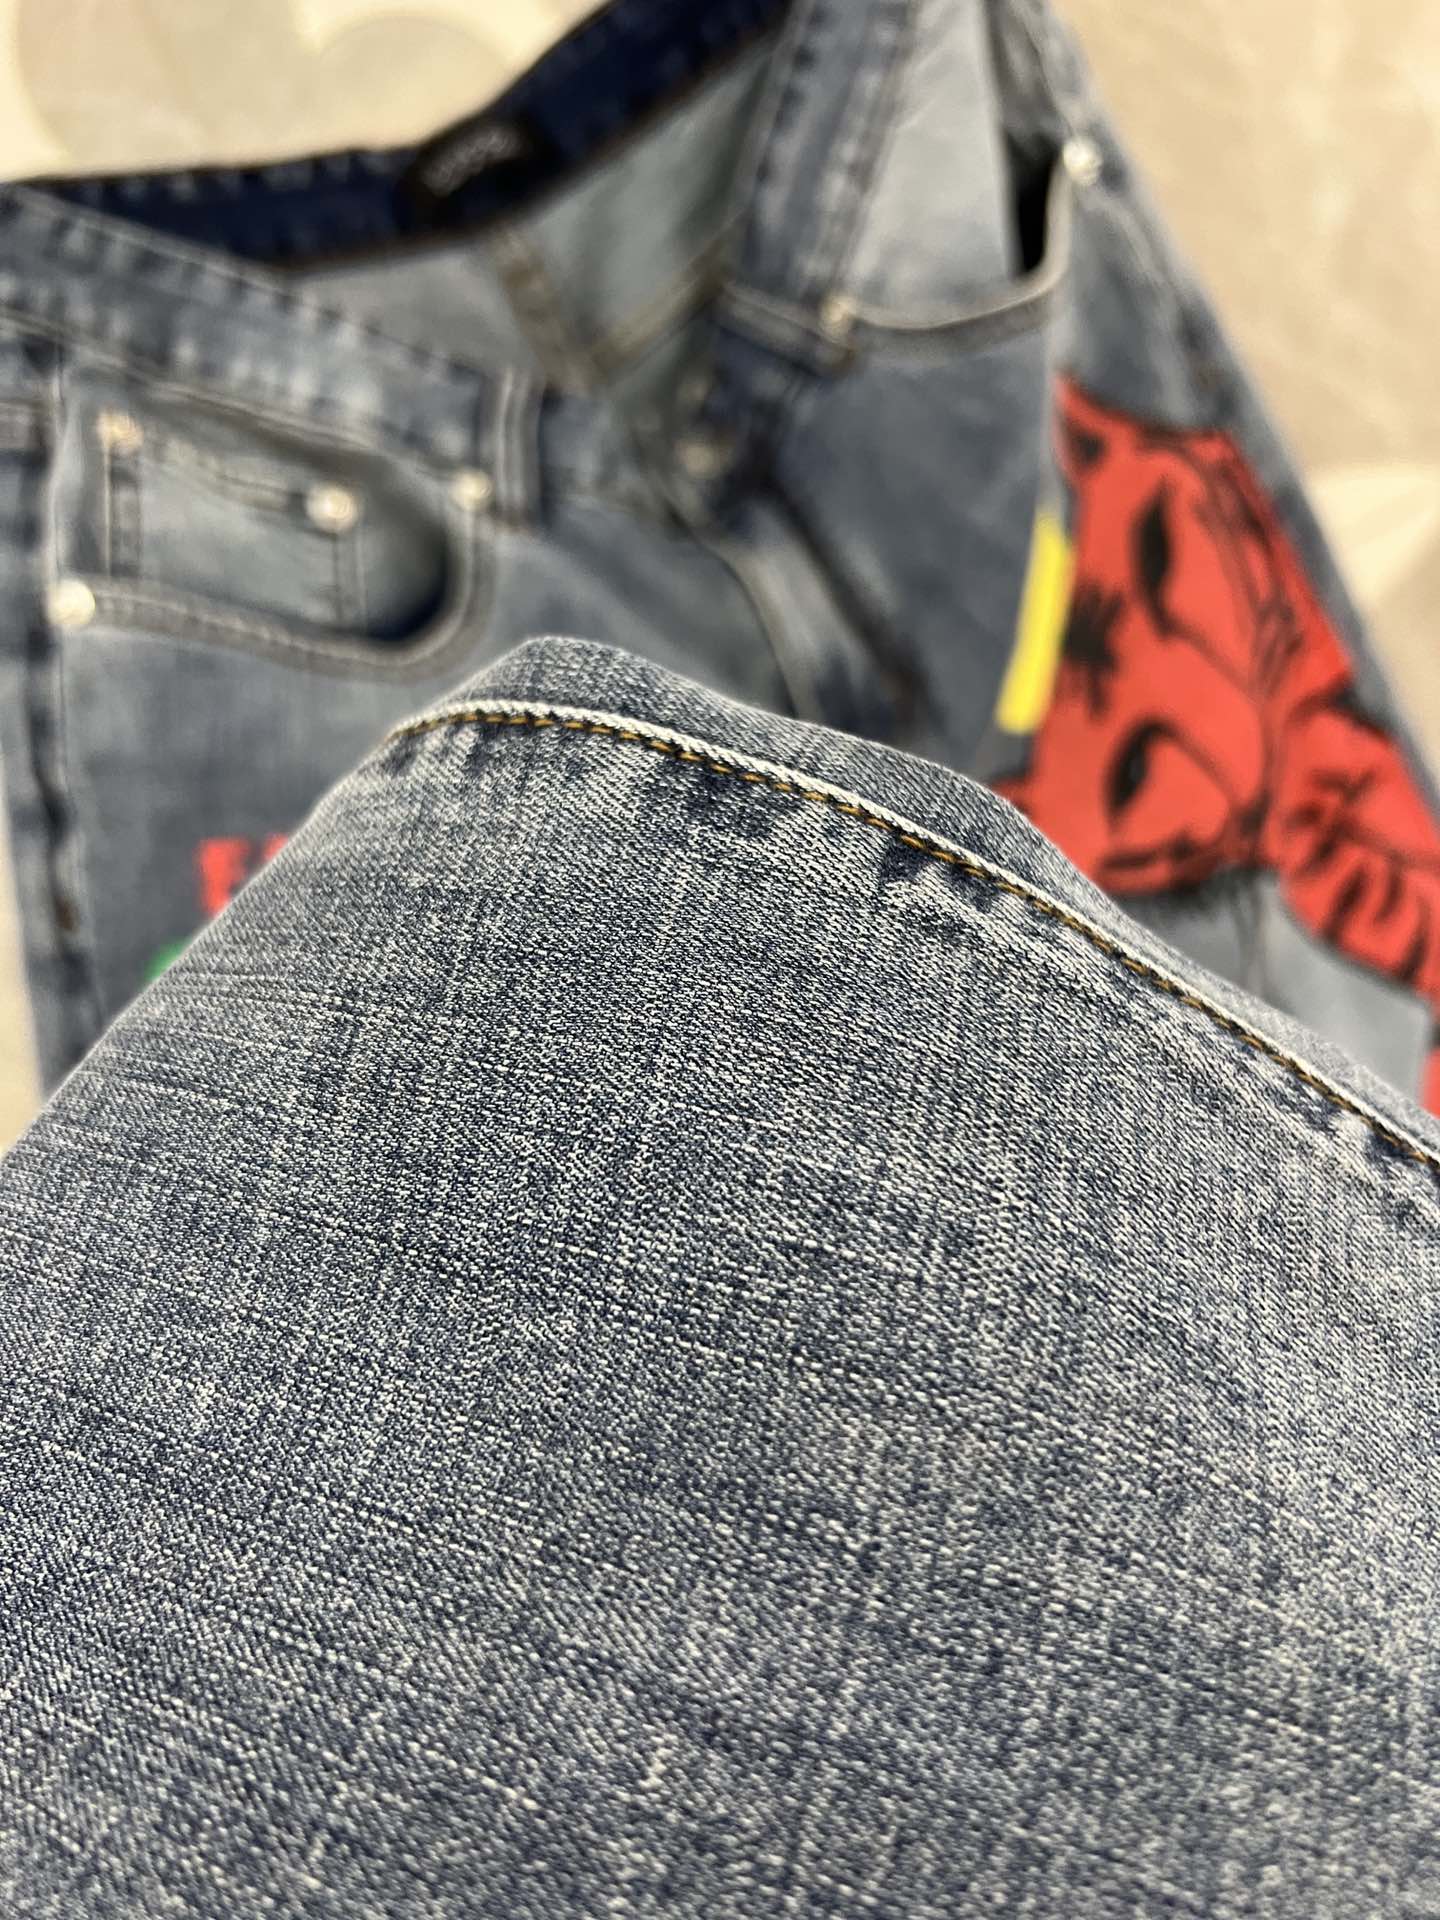 Gucci Jeans